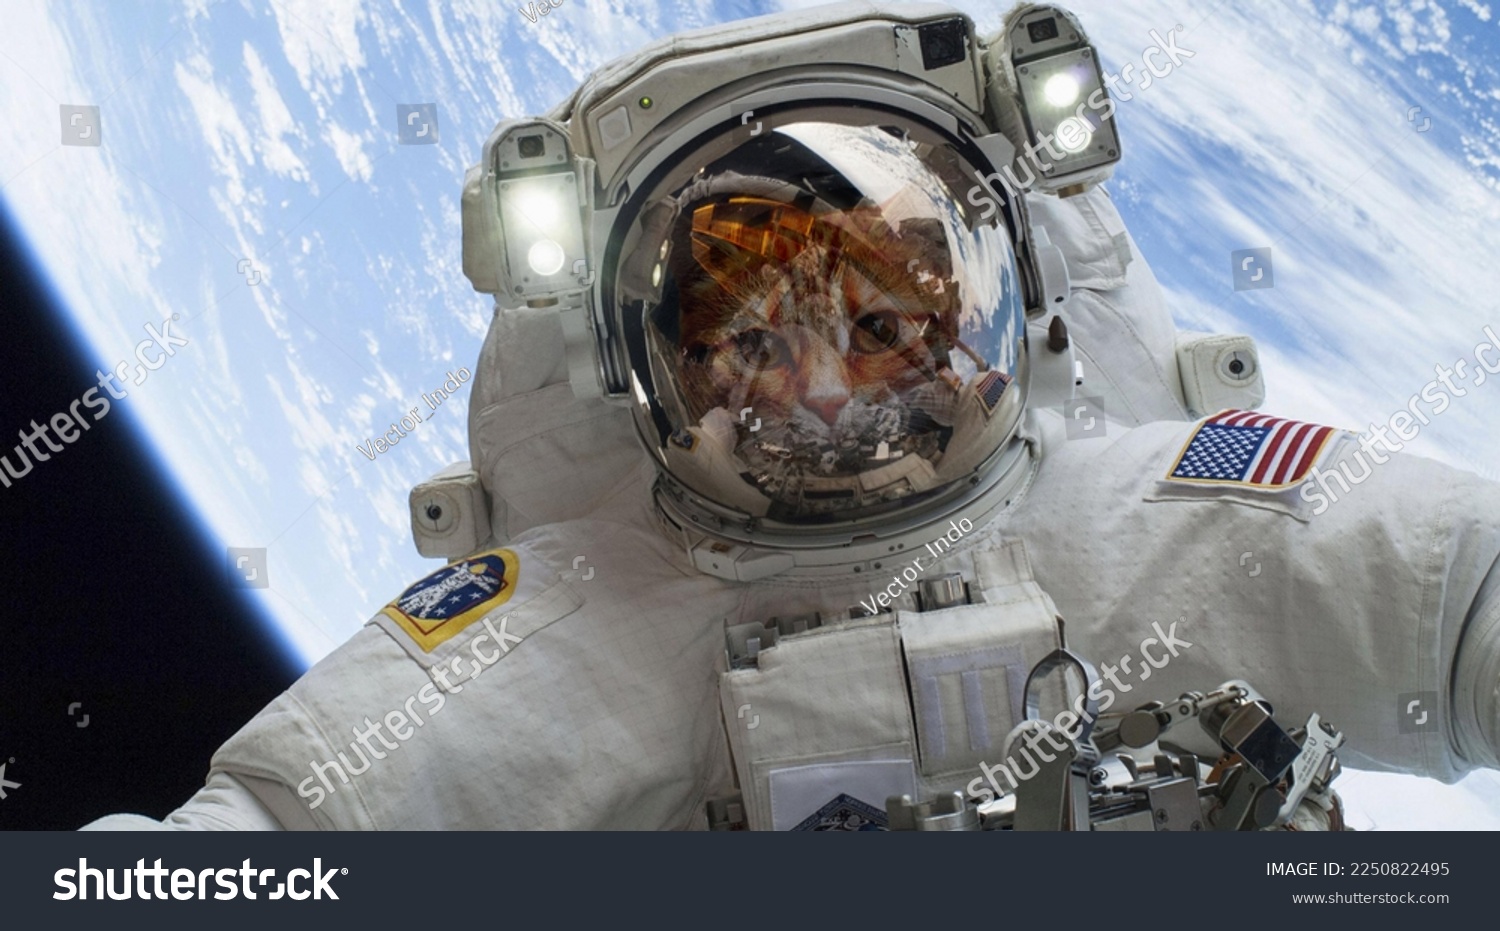 cat astronaut creative wallpaper image #2250822495